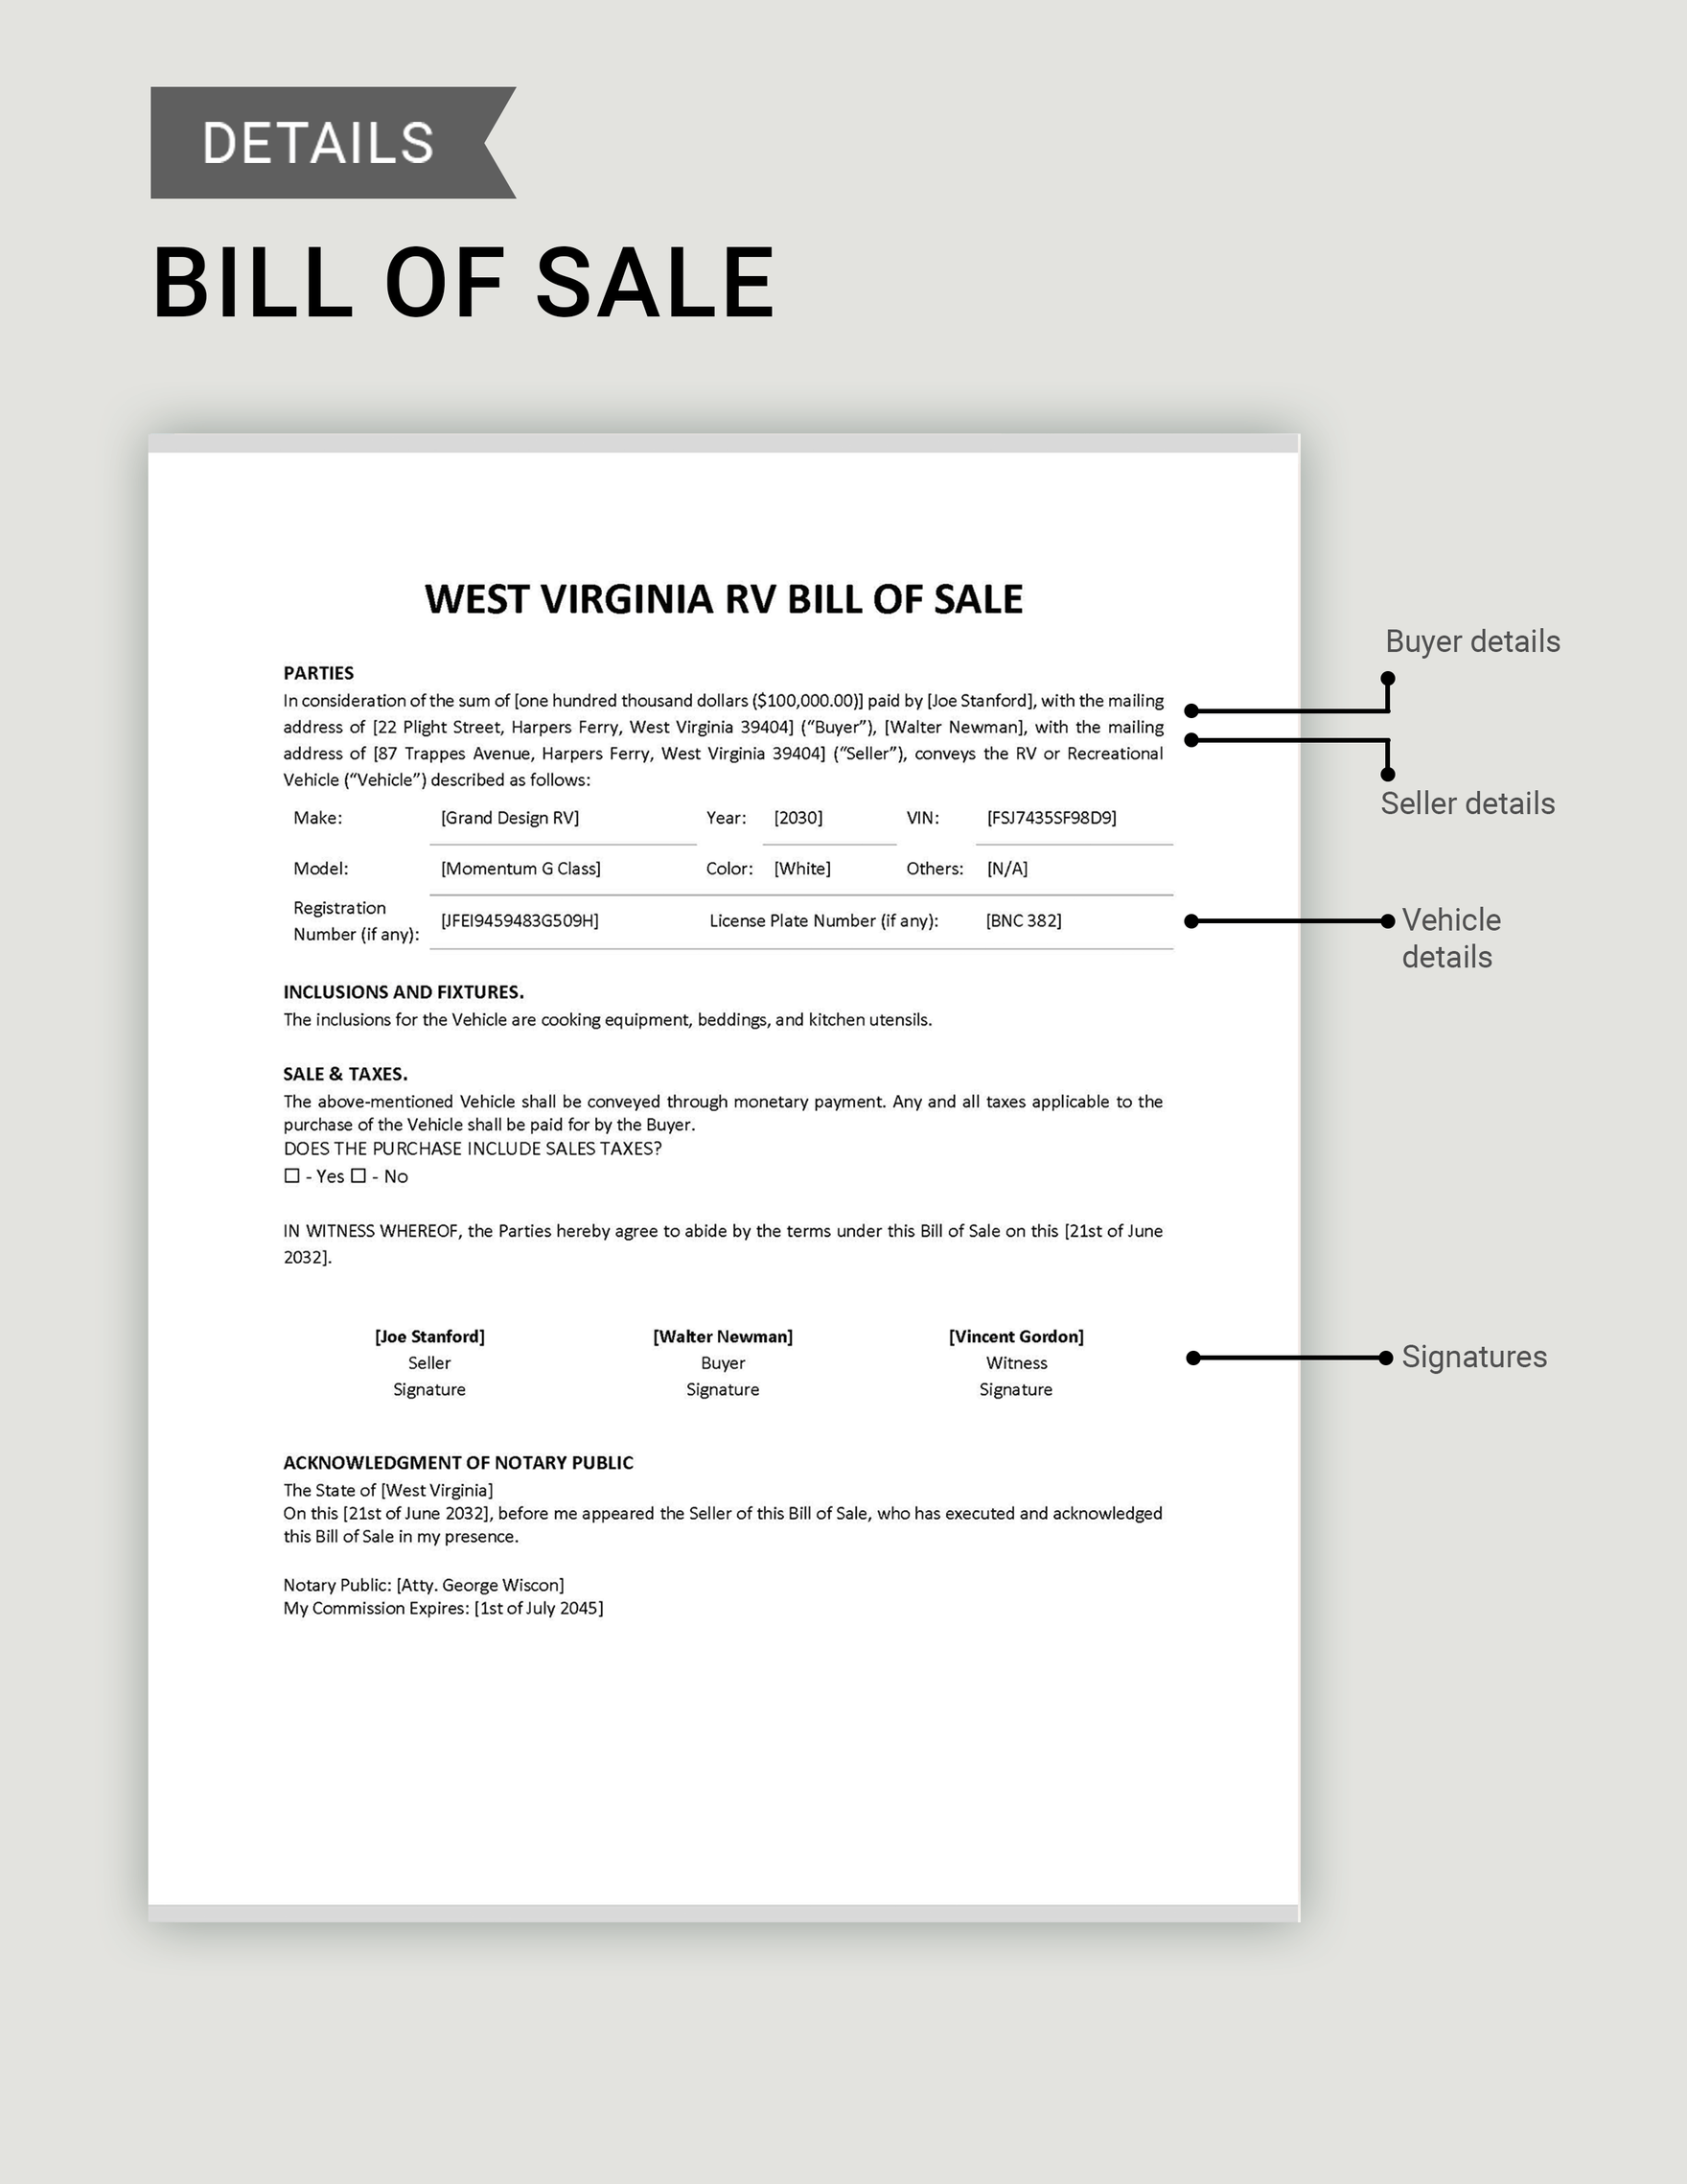 West Virginia RV Bill of Sale Template